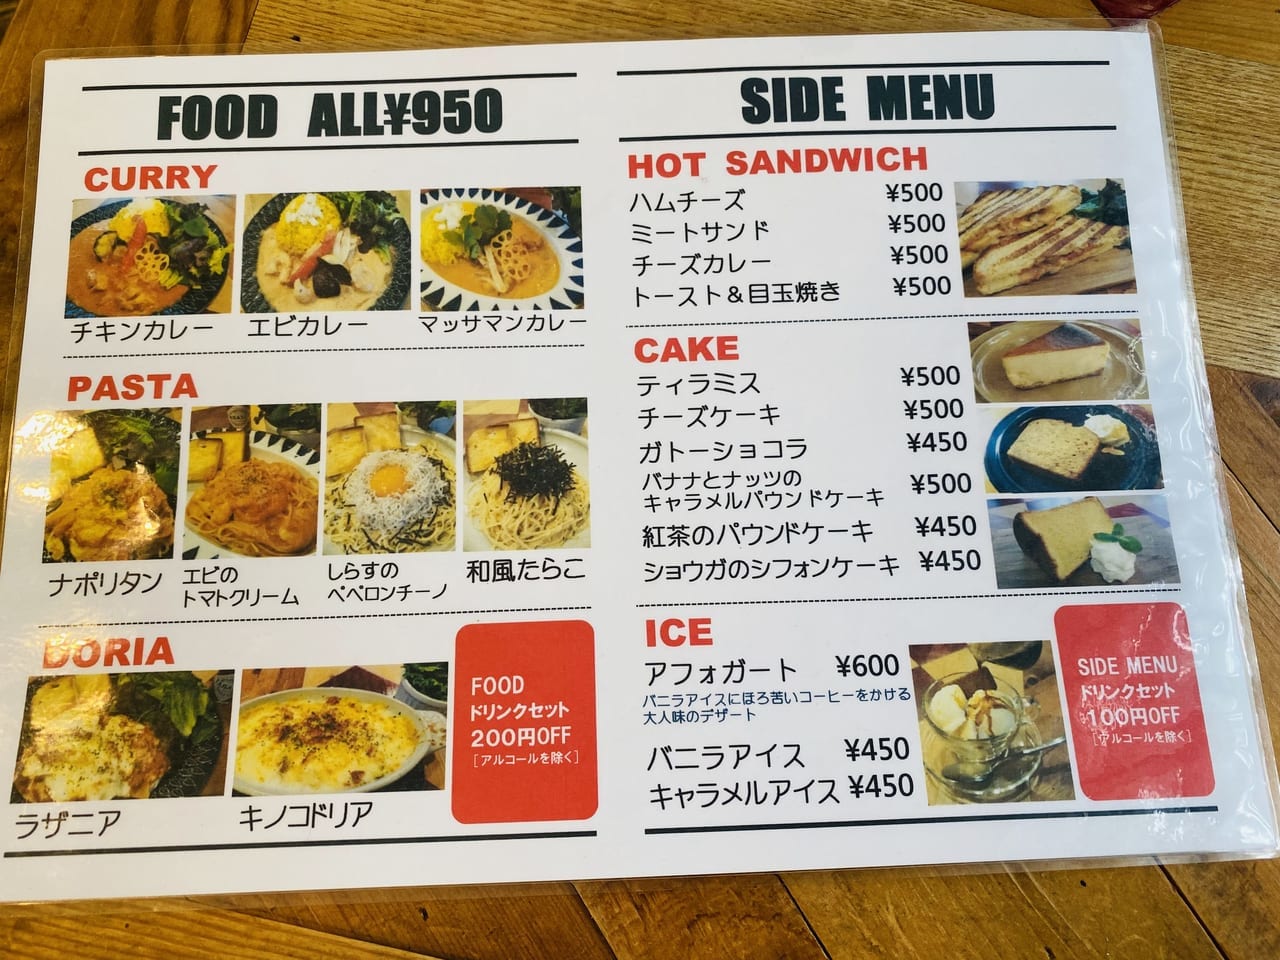 Cafe Hot'n 竹ノ塚